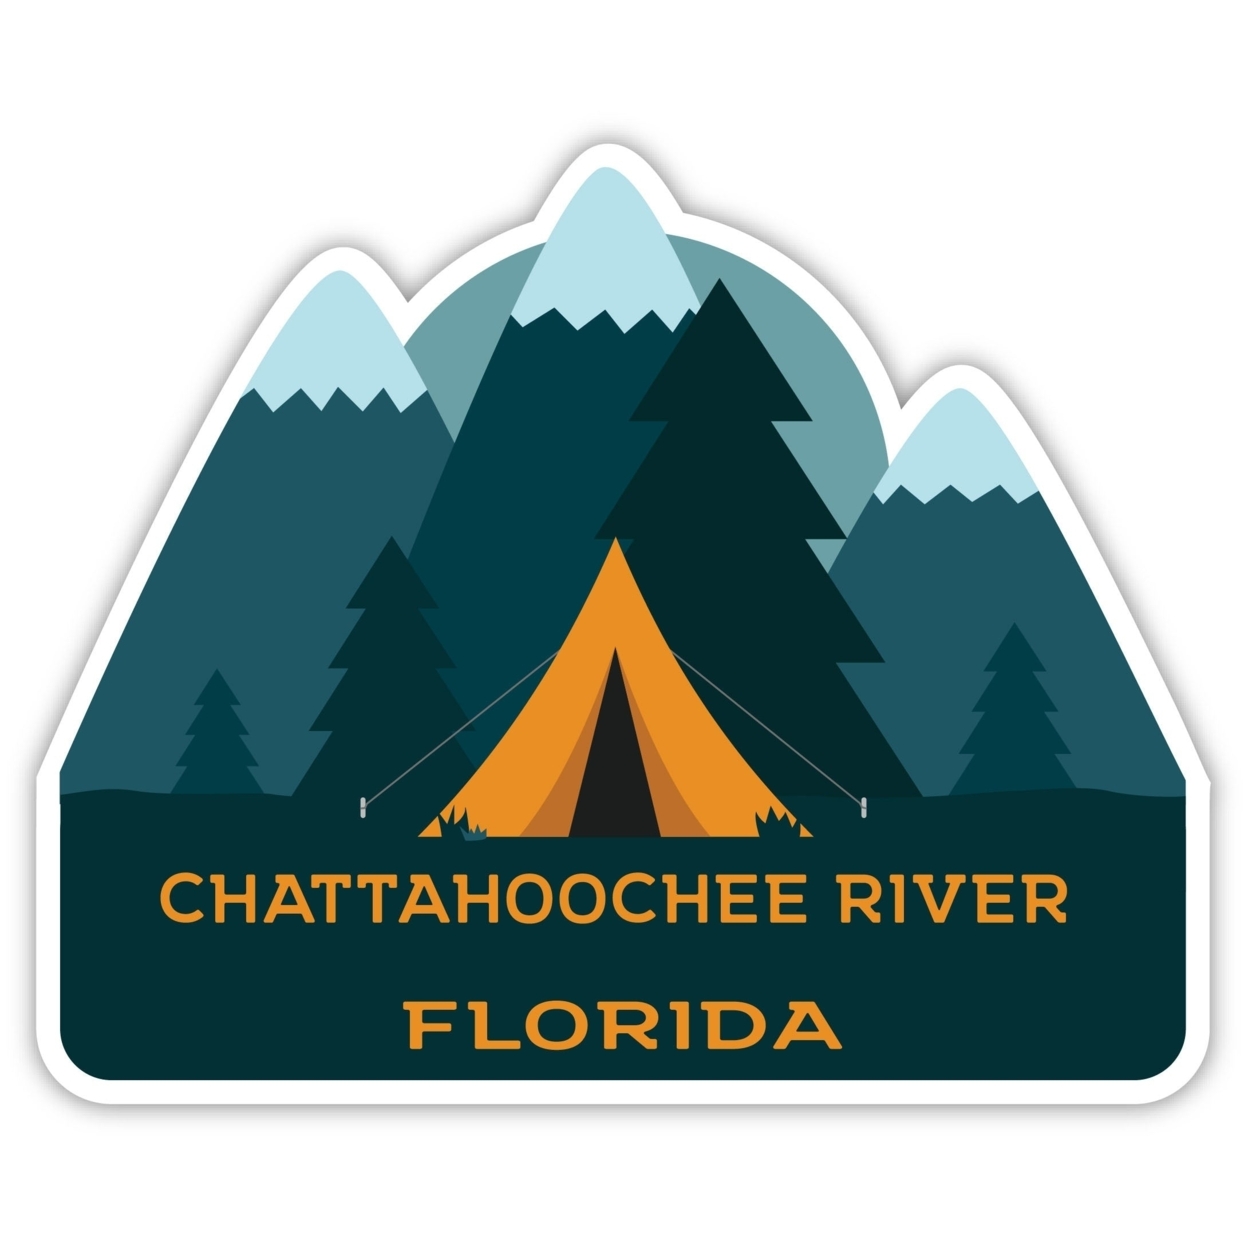 Chattahoochee River Florida Souvenir Decorative Stickers (Choose Theme And Size) - Single Unit, 8-Inch, Tent